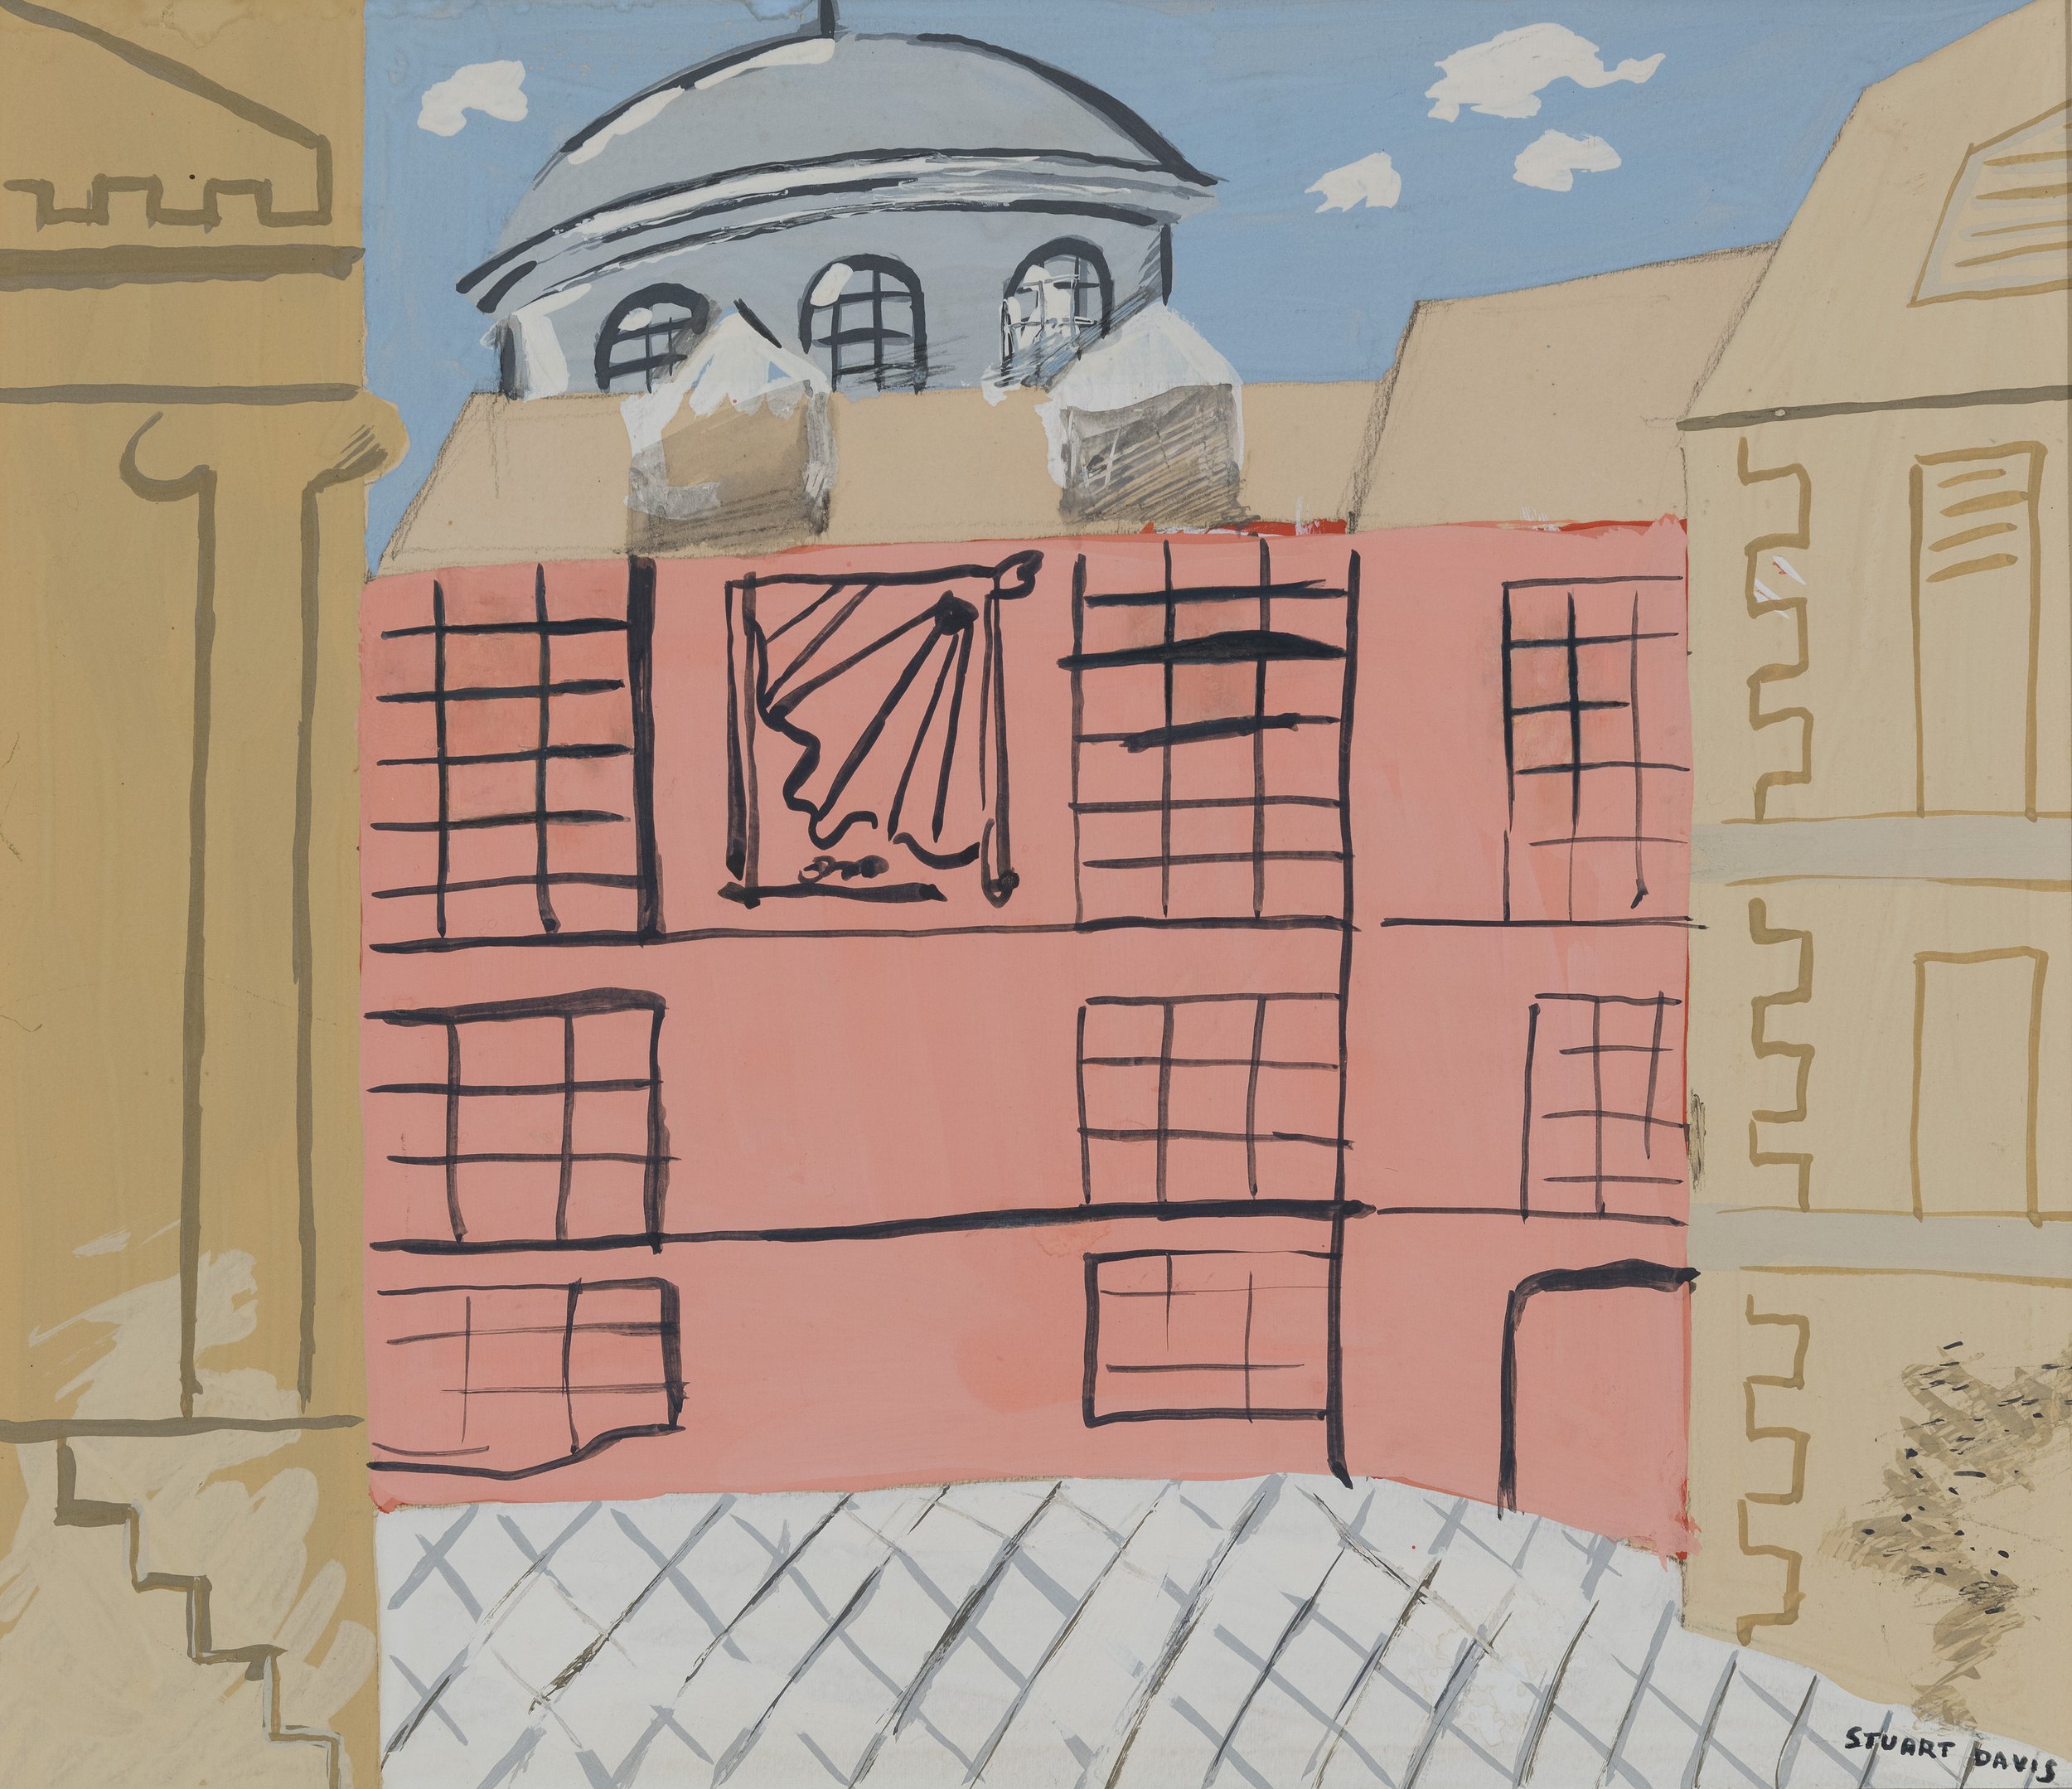 Halpert &amp; Davis &lt;alt: Parisian cityscape with buildings in tan, pink, and gray against a blue sky &lt;/&gt;